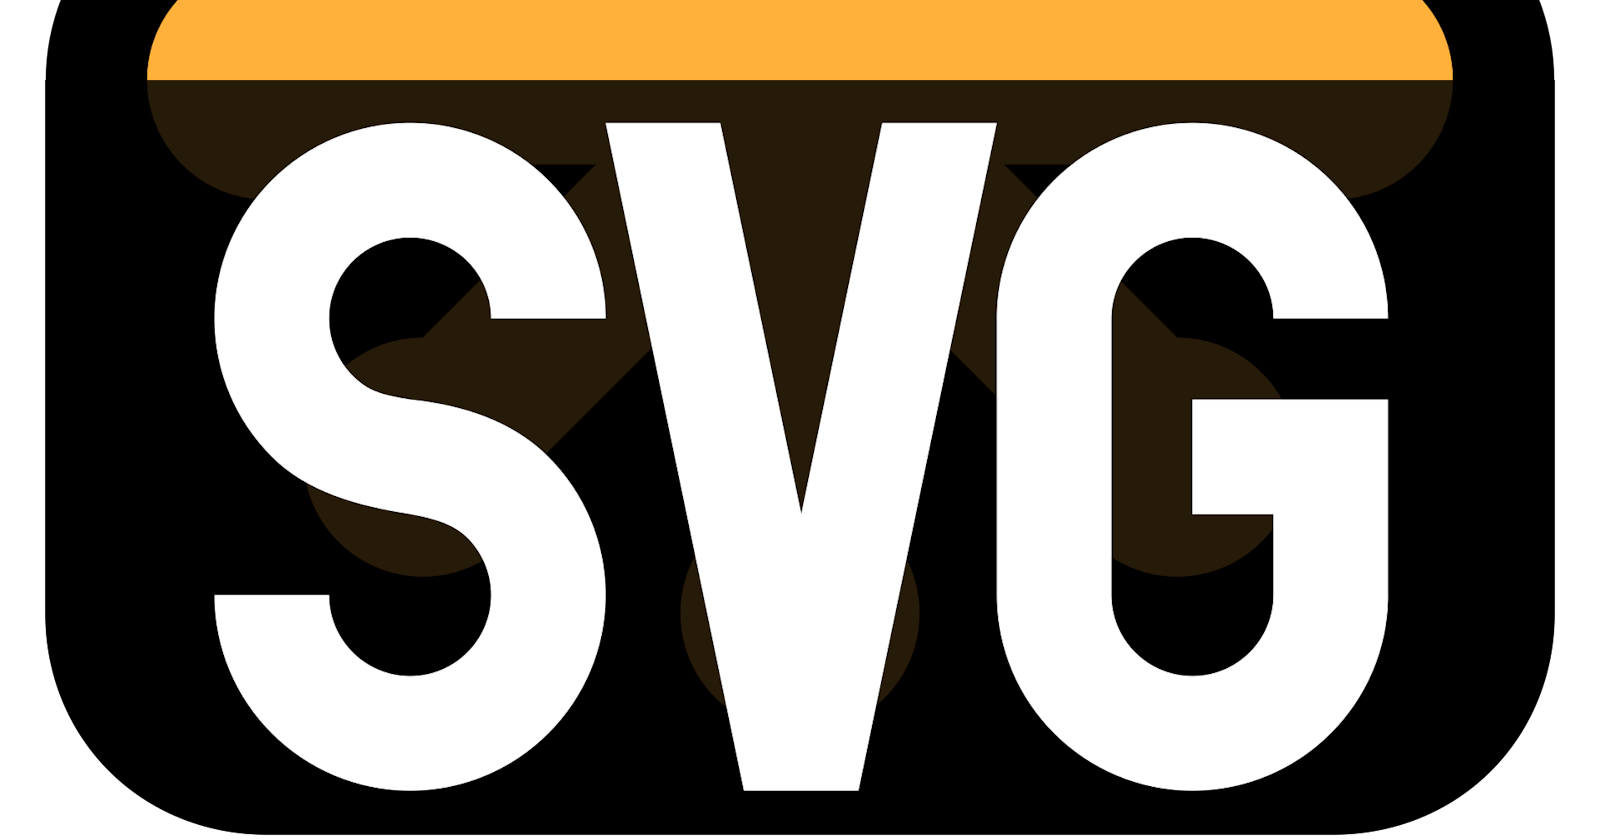 Embedding SVG's as an icon set